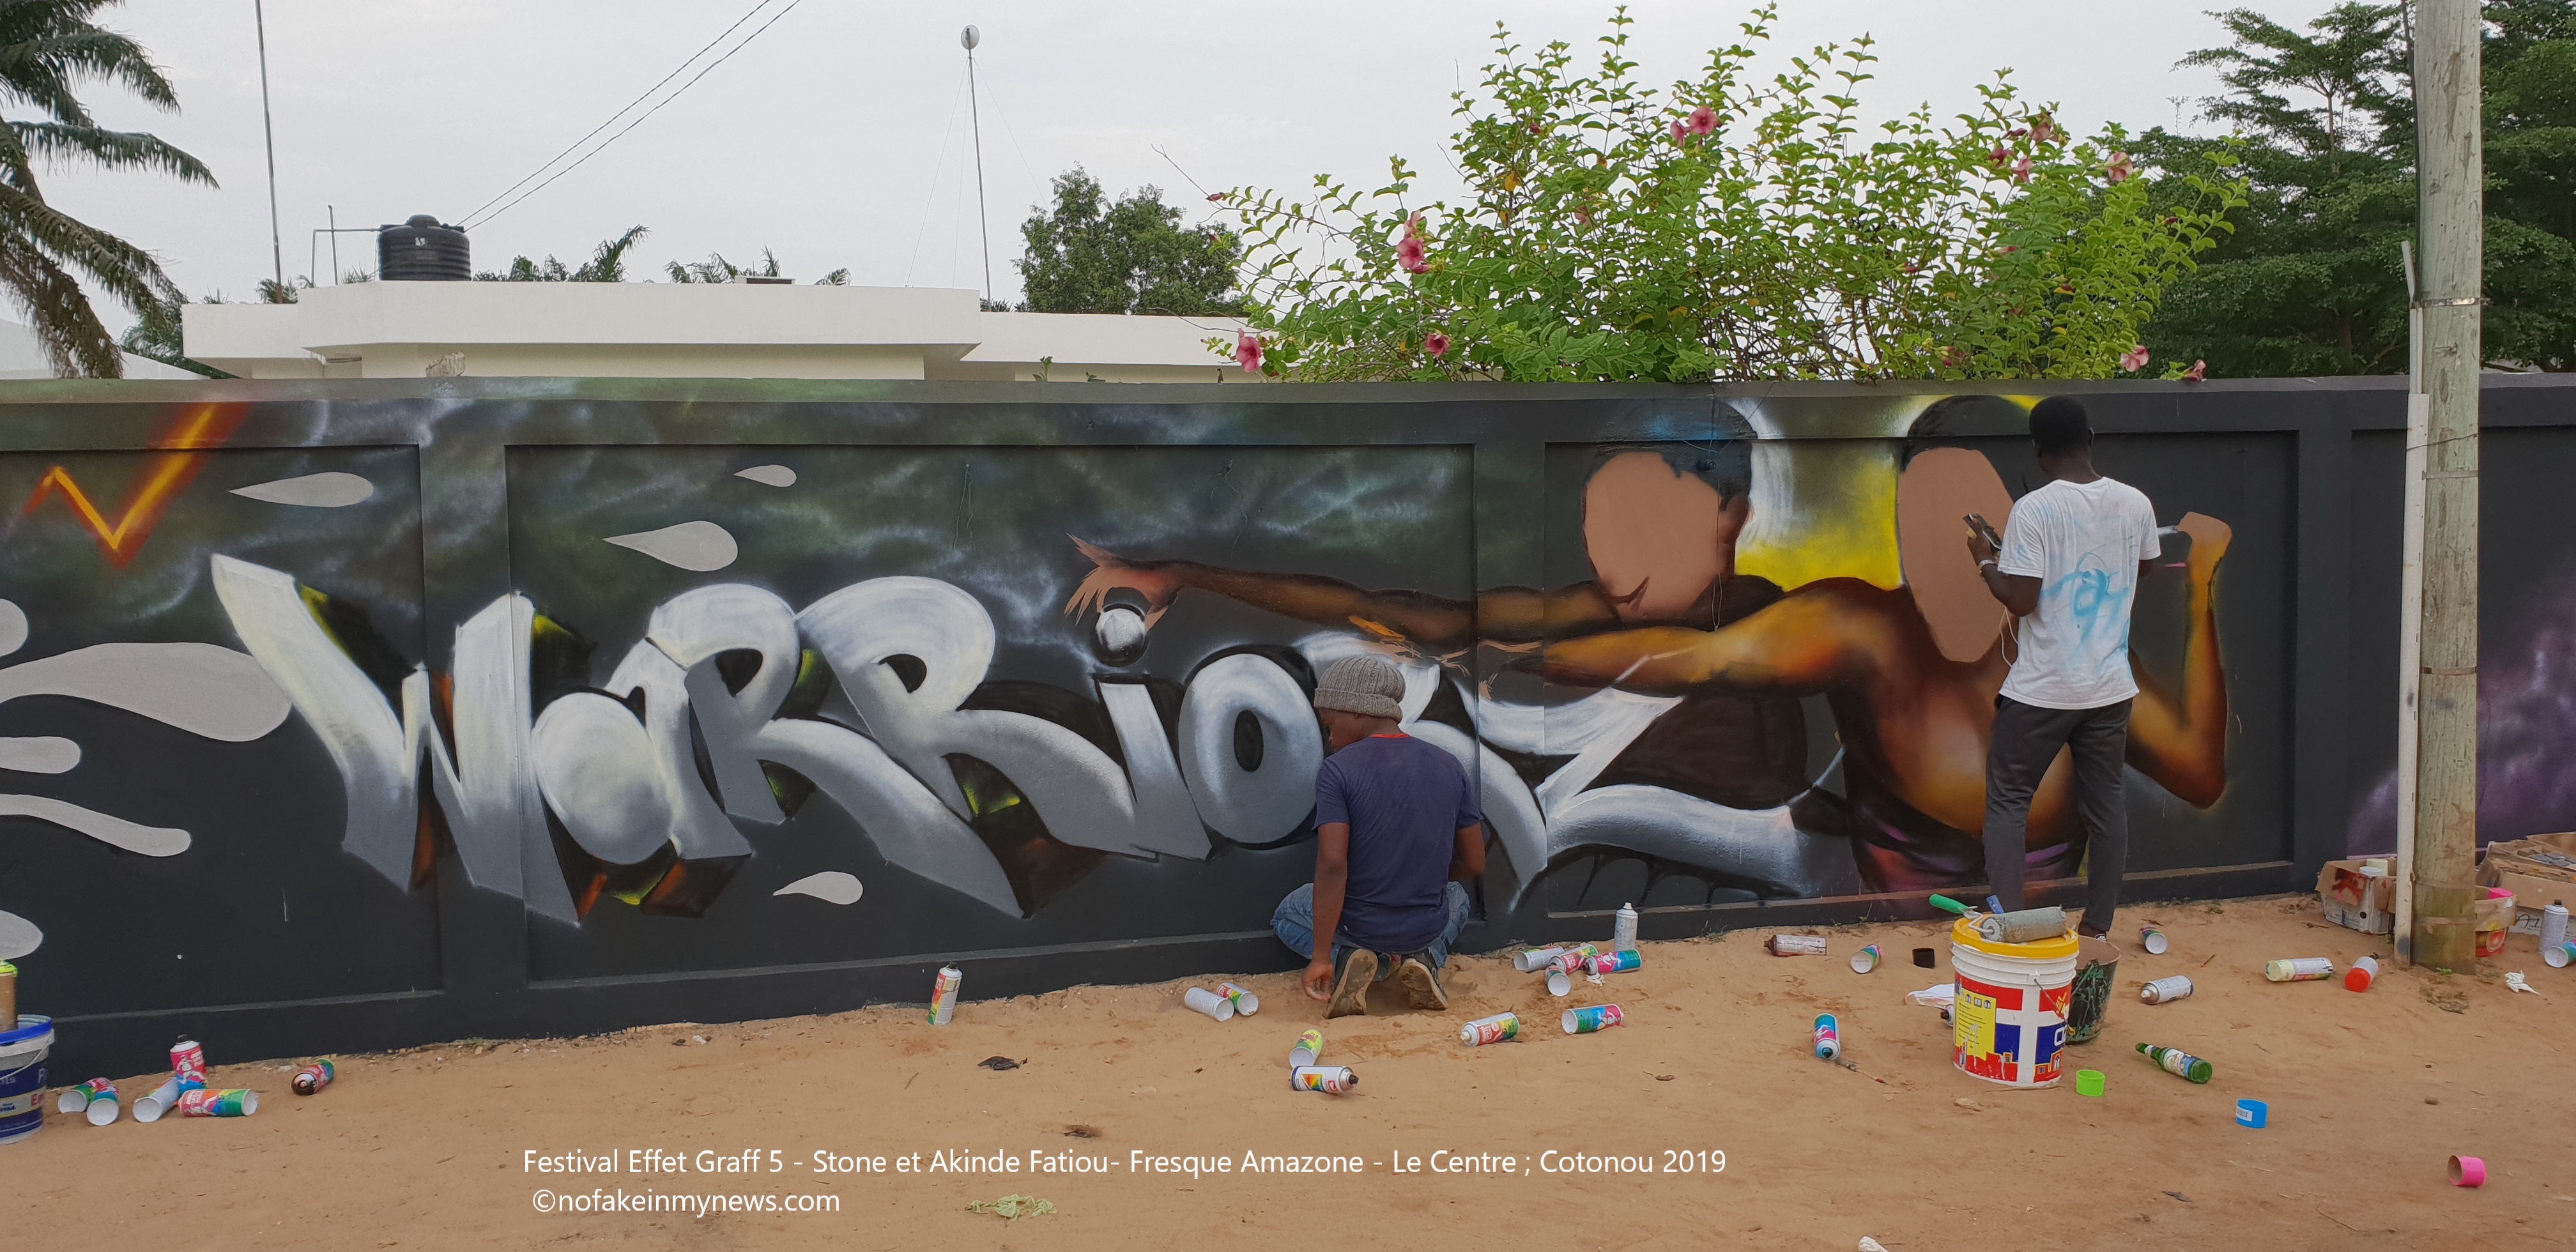 Festival Effet Graff 5 - Stone et Akinde Fatiou- Fresque Amazone - Le Centre ; Cotonou 2019 ©nofakeinmynews